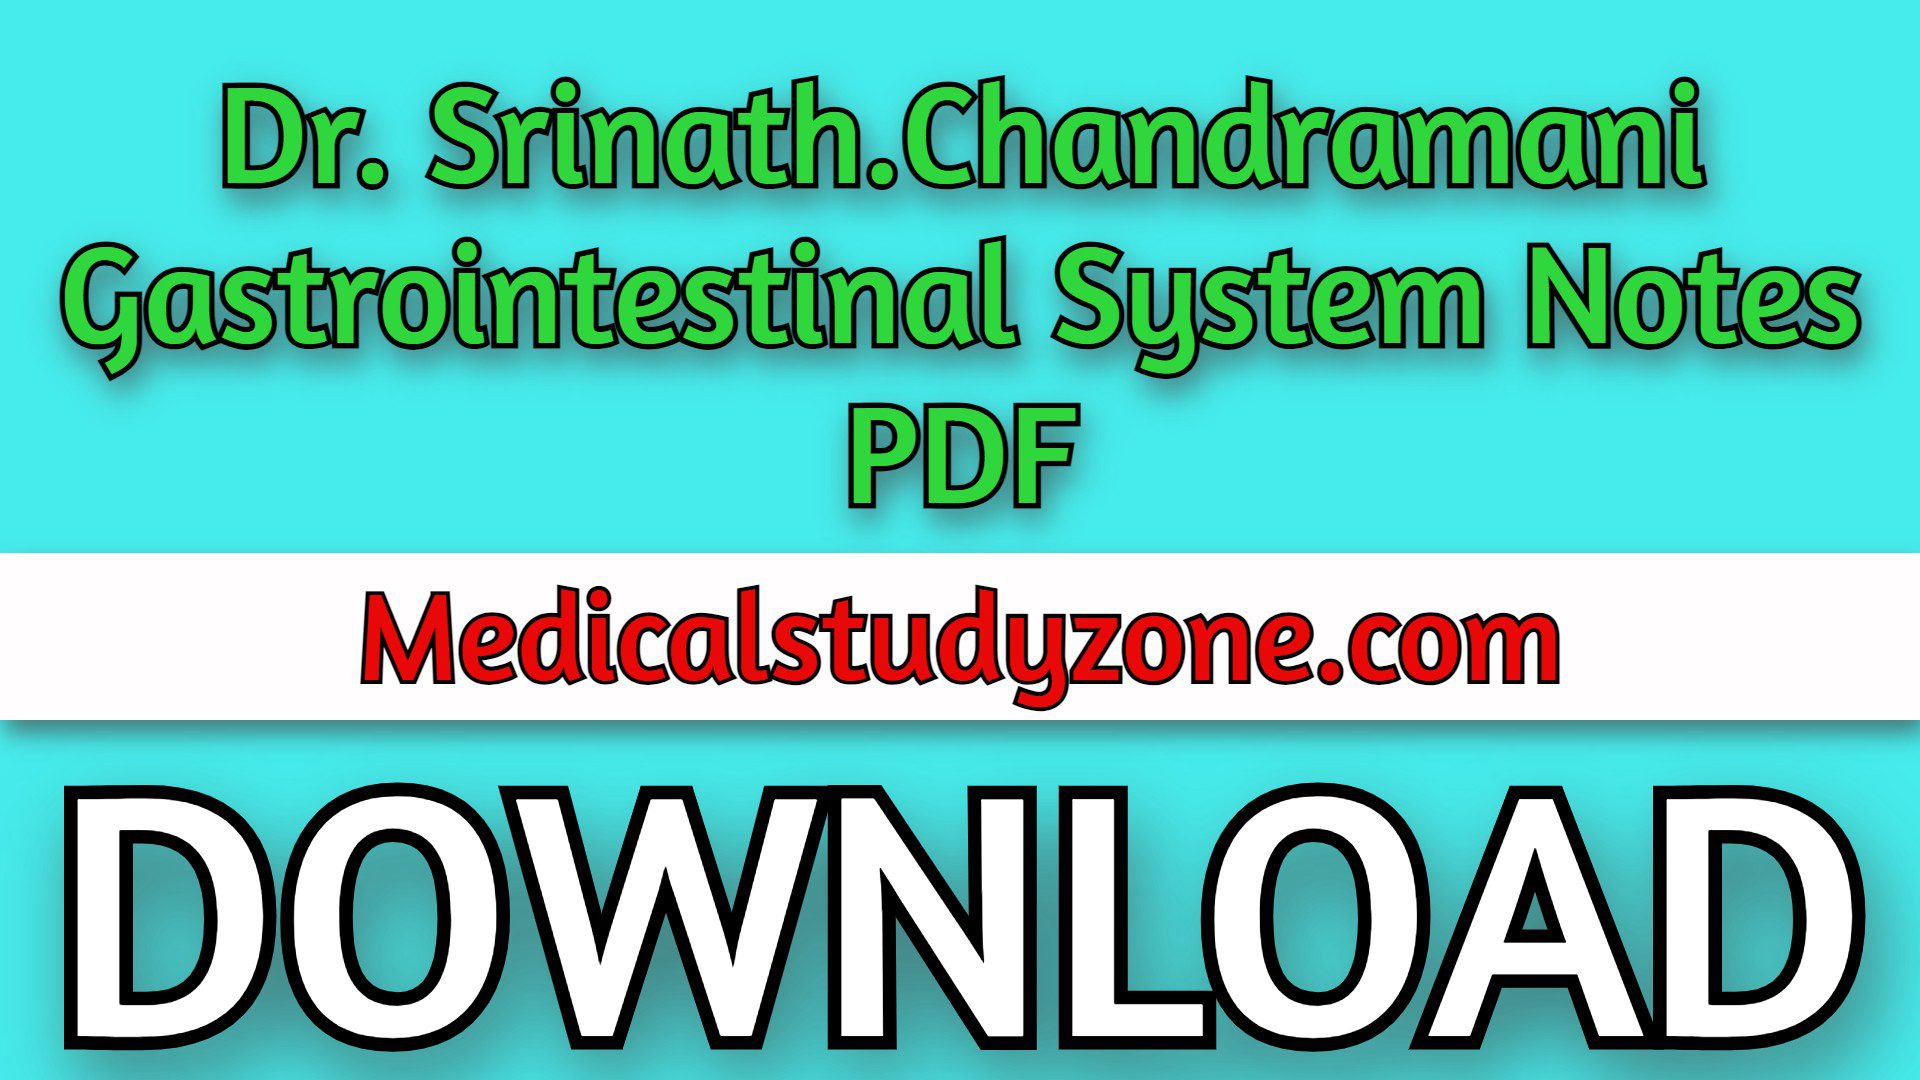 Download Dr Srinath Chandramani Gastrointestinal System Notes PDF Free